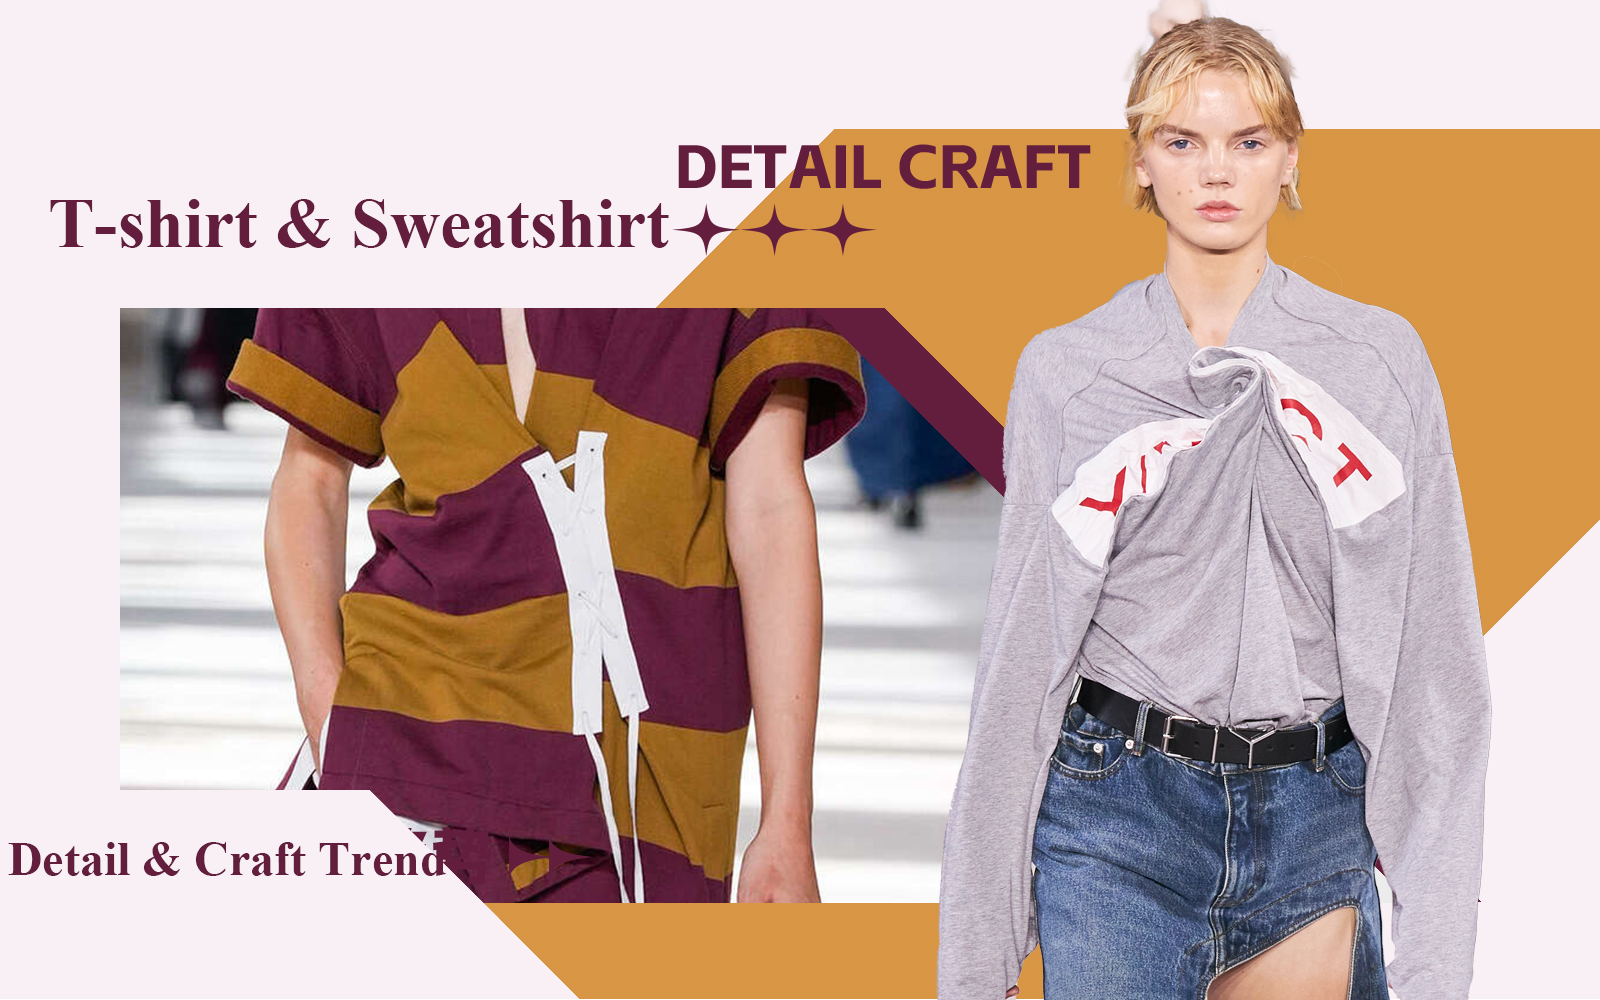 Avant-garde Construction -- The Detail & Craft Trend for T-shirt & Sweatshirt